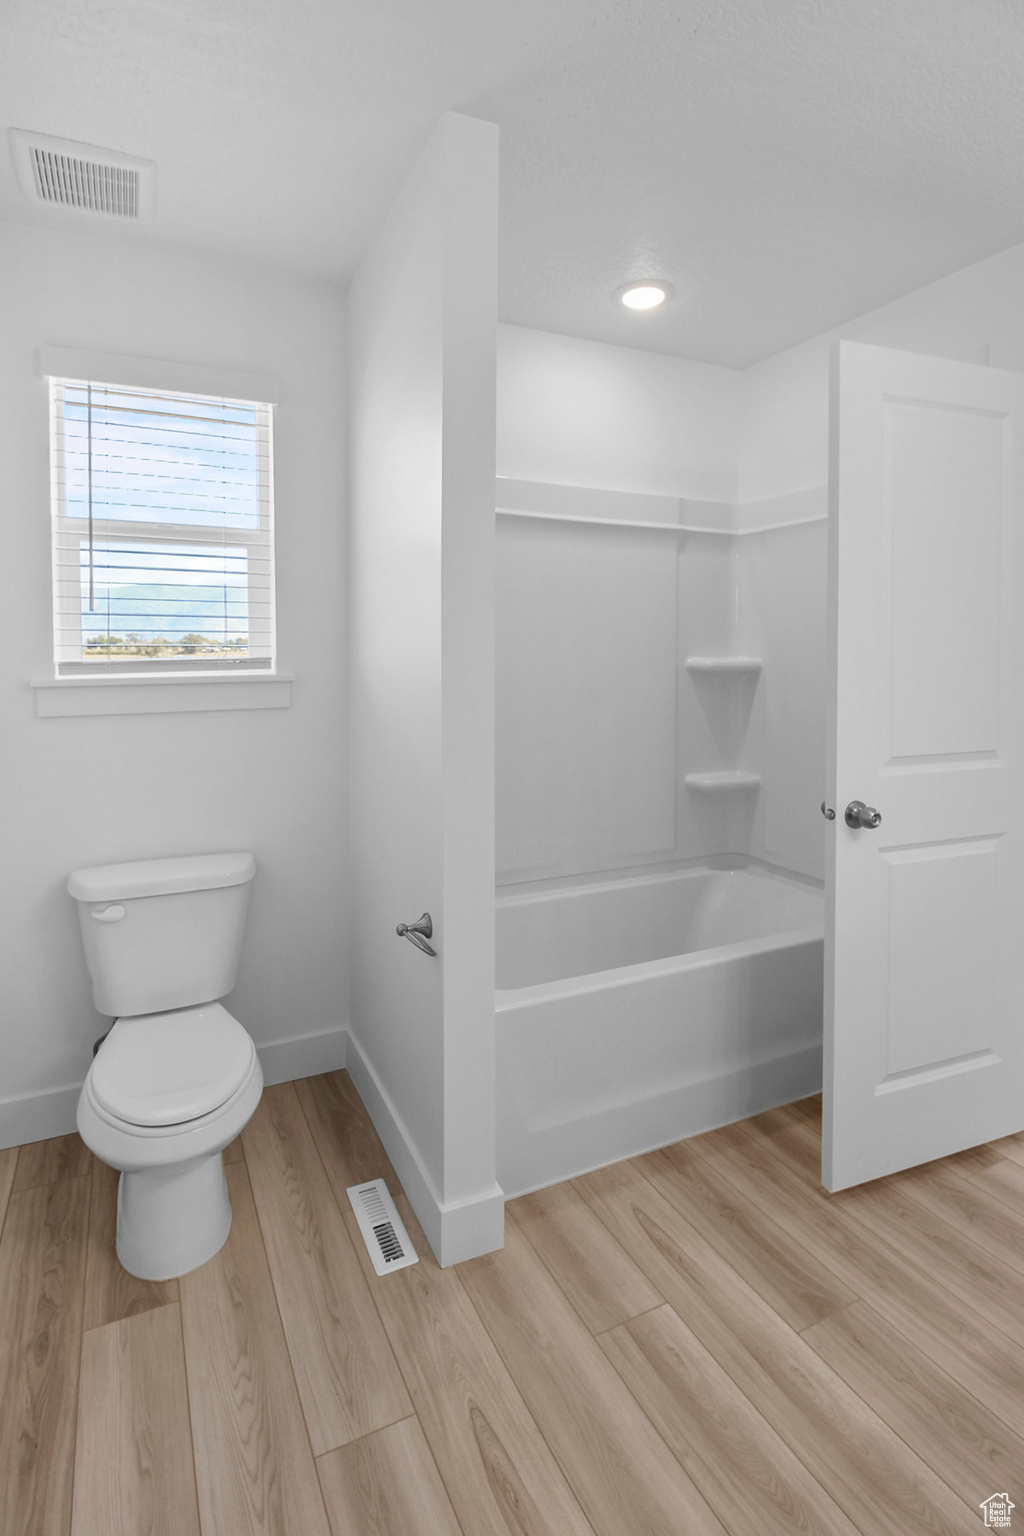 Bathroom with hardwood / wood-style floors, washtub / shower combination, and toilet